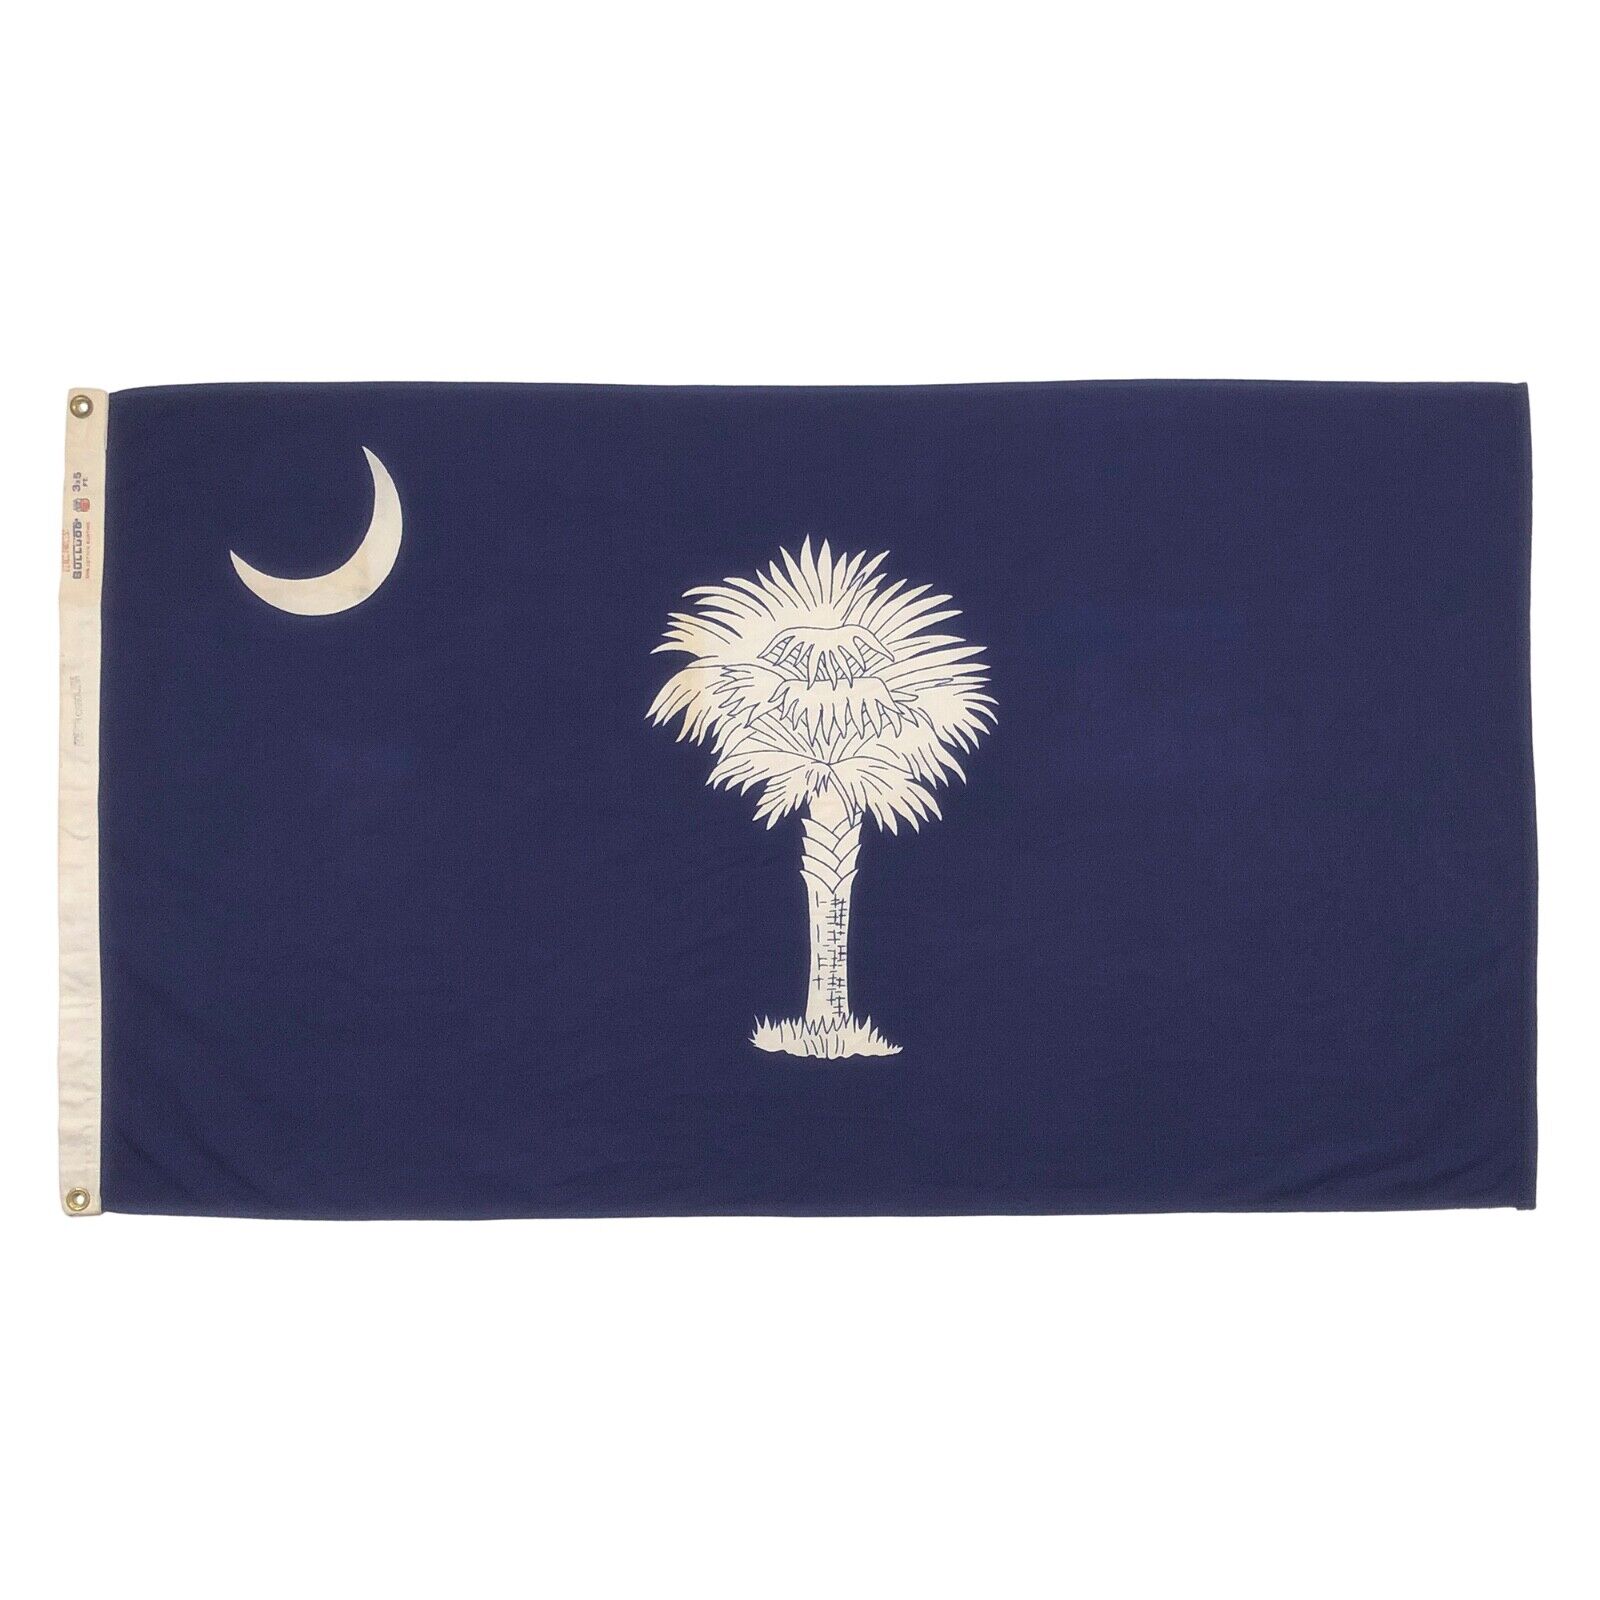 Vintage Cotton Flag South Carolina American Old Cloth Art Southern USA Palm Tree